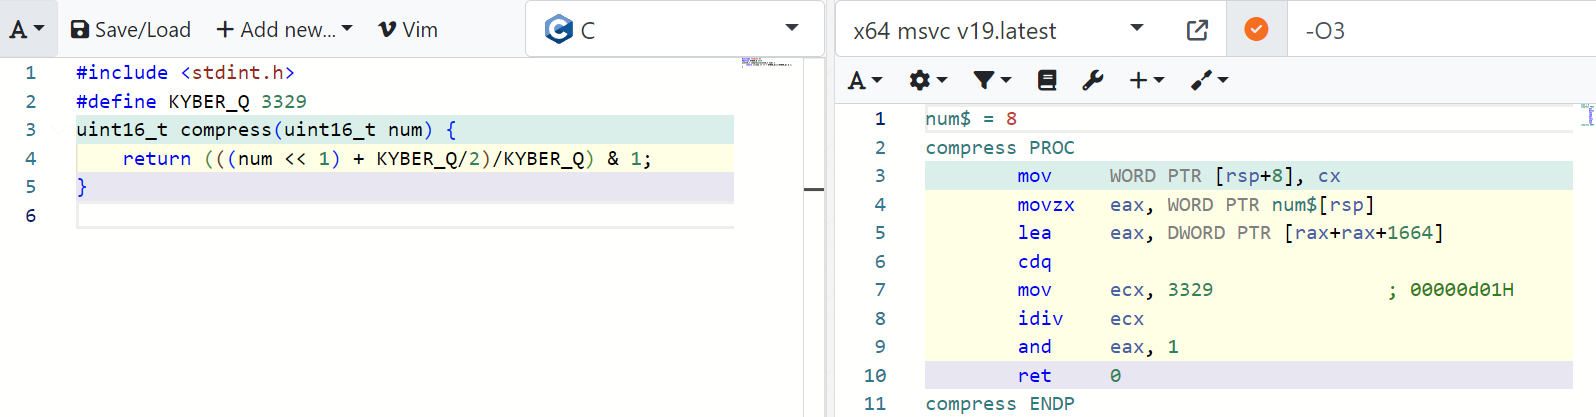 Compilation result: x64 msvc v19.latest